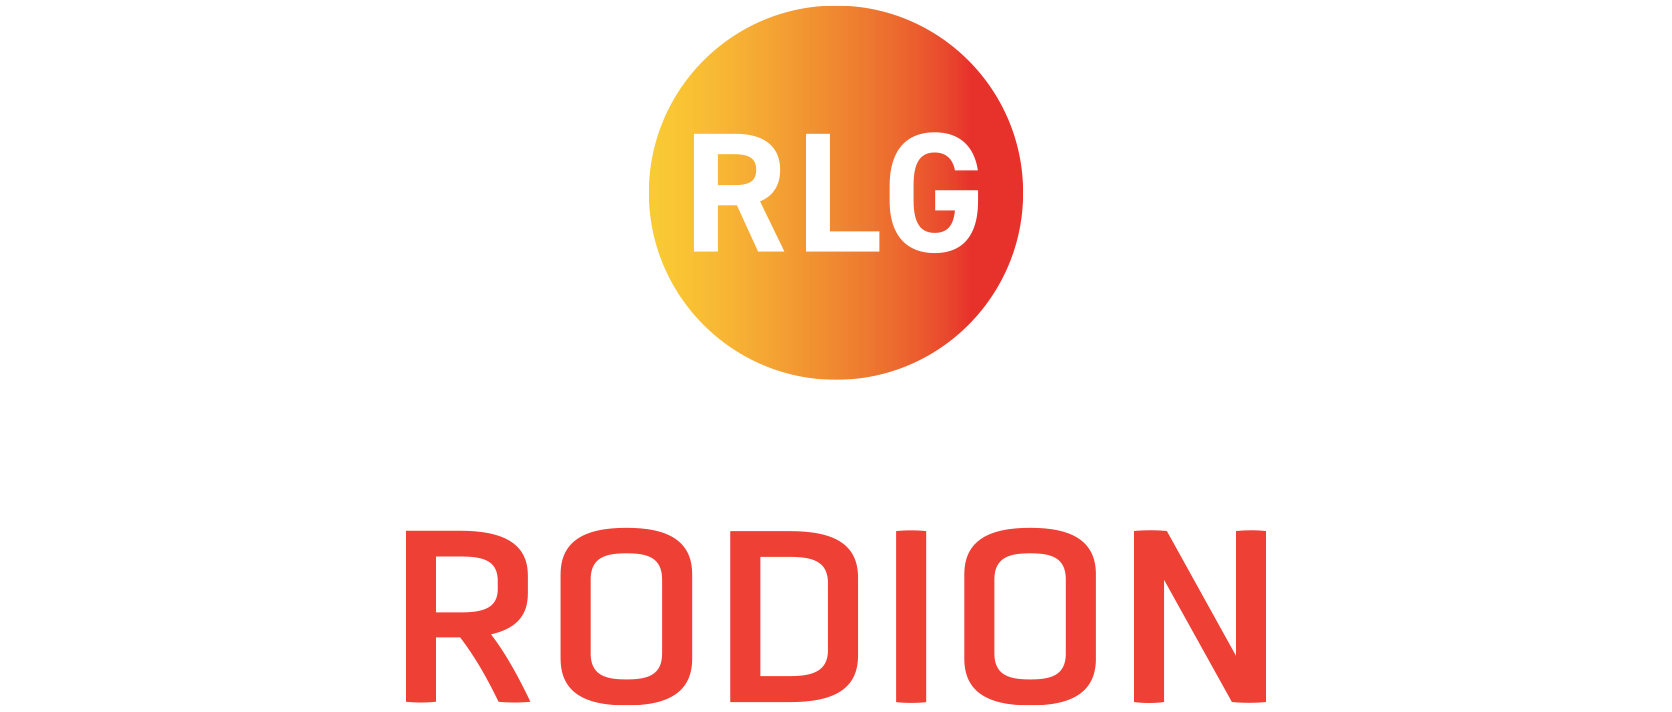 RLG RODION Logo